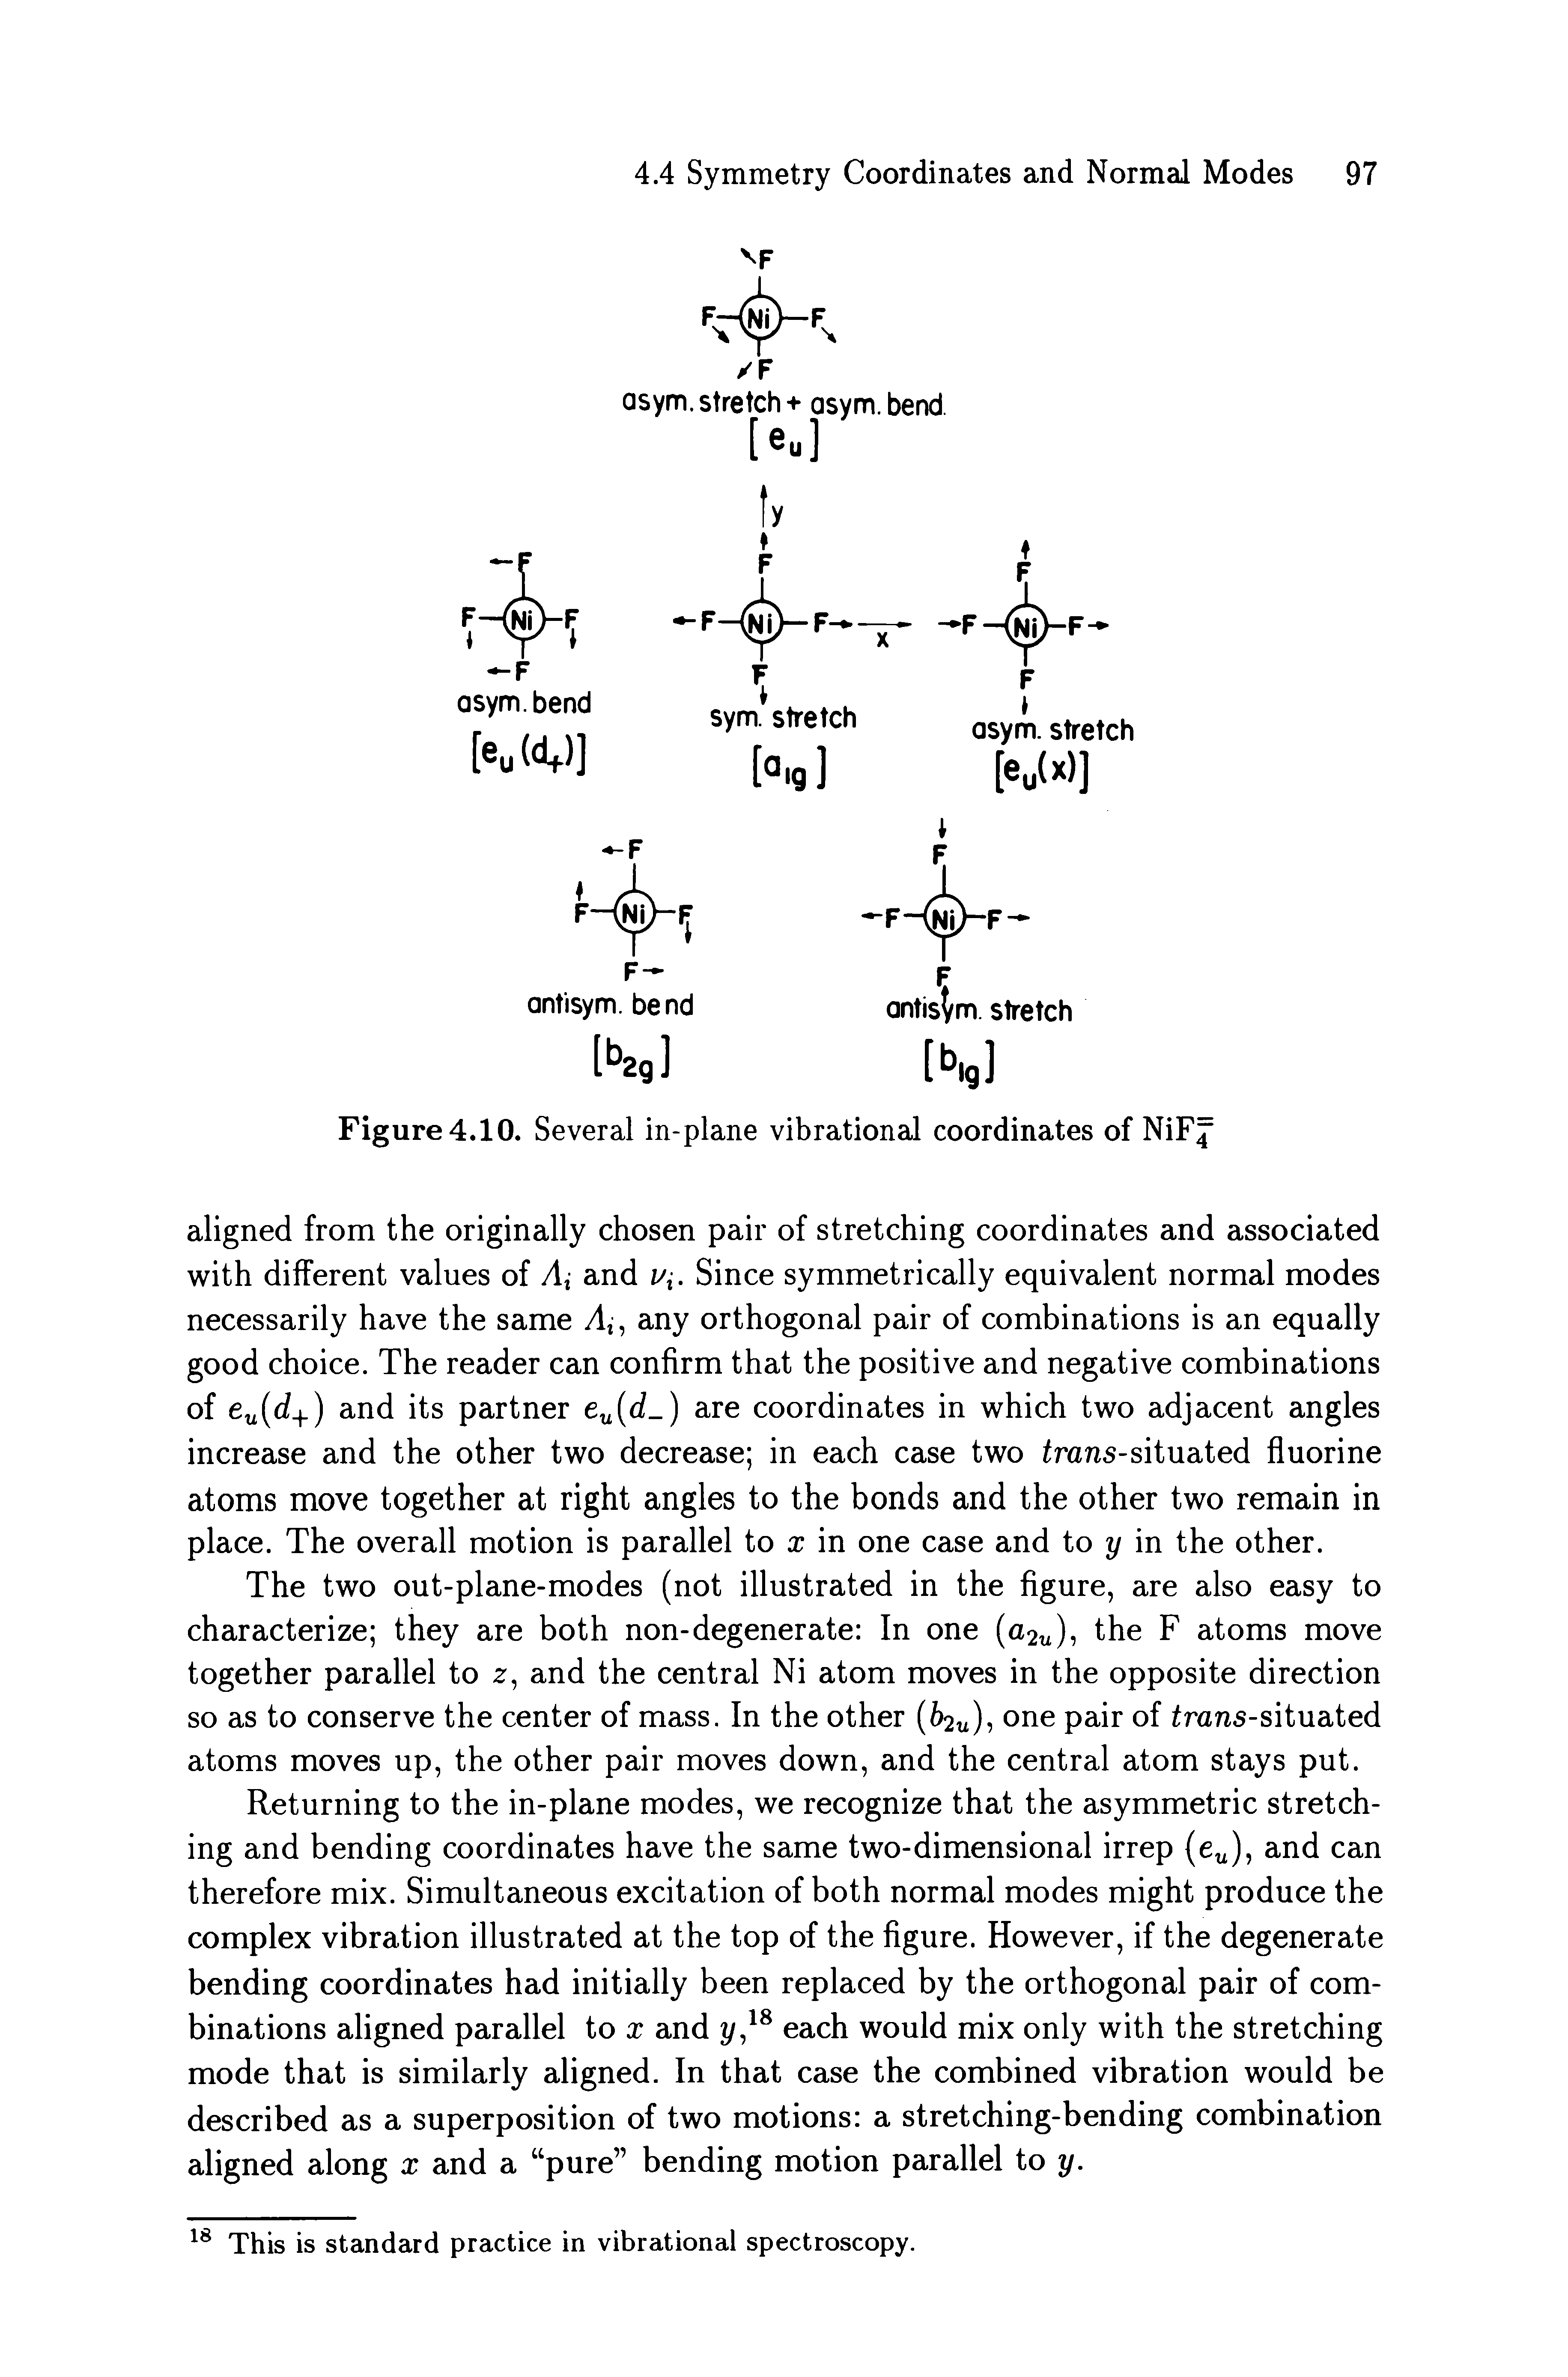 Figure 4.10. Several in-plane vibrational coordinates of NiFj"...